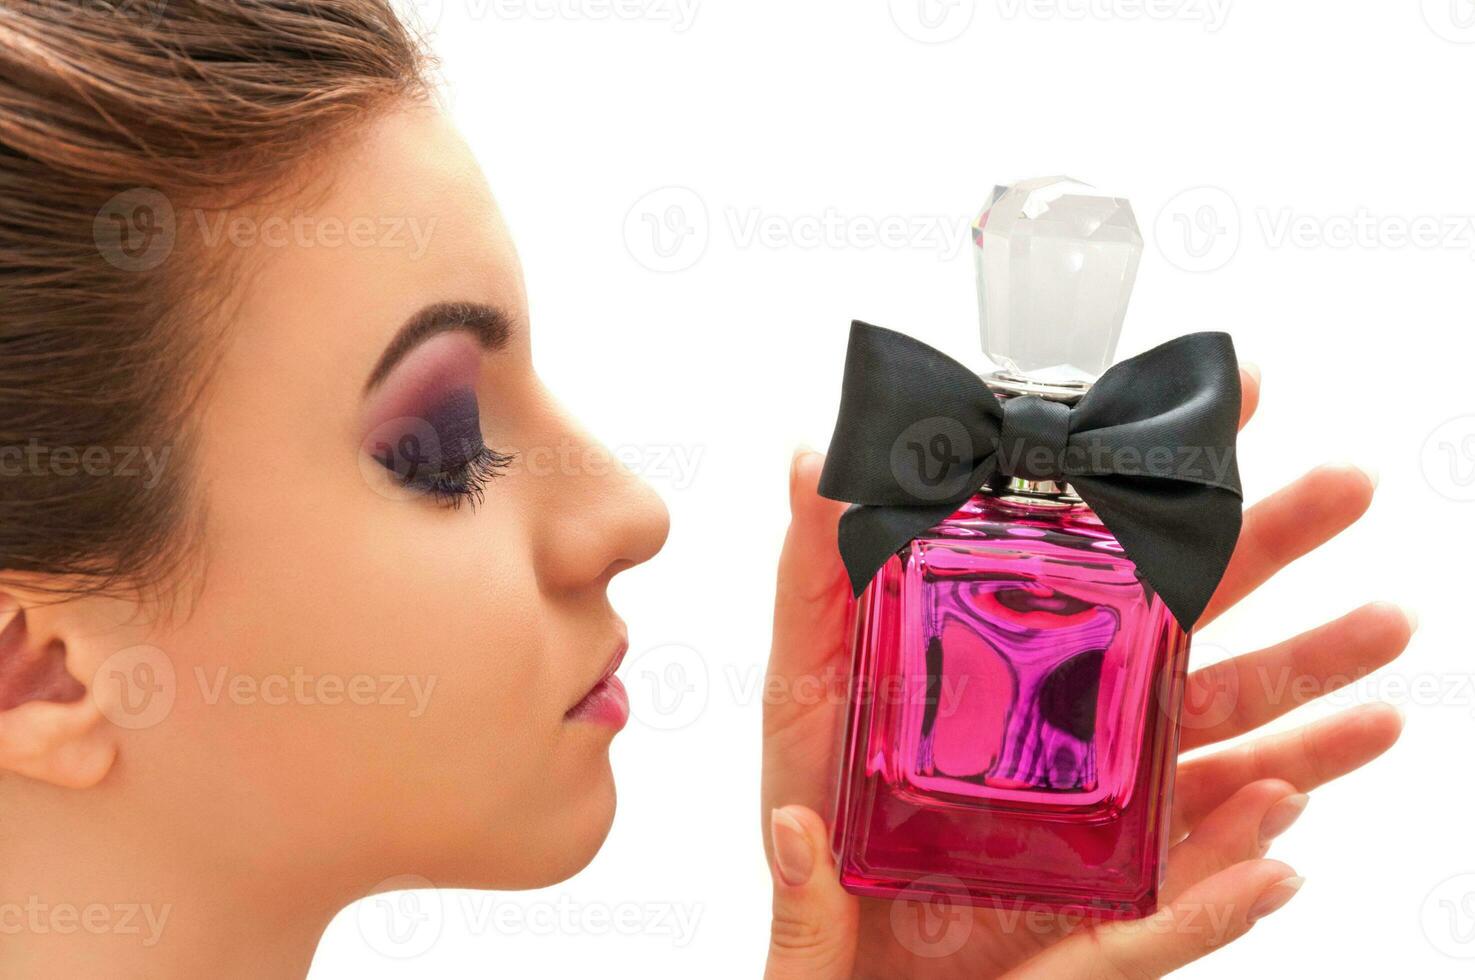 cerca arriba Disparo de el joven modelo con profesional hacer arriba mirando a rosado botella con perfume foto